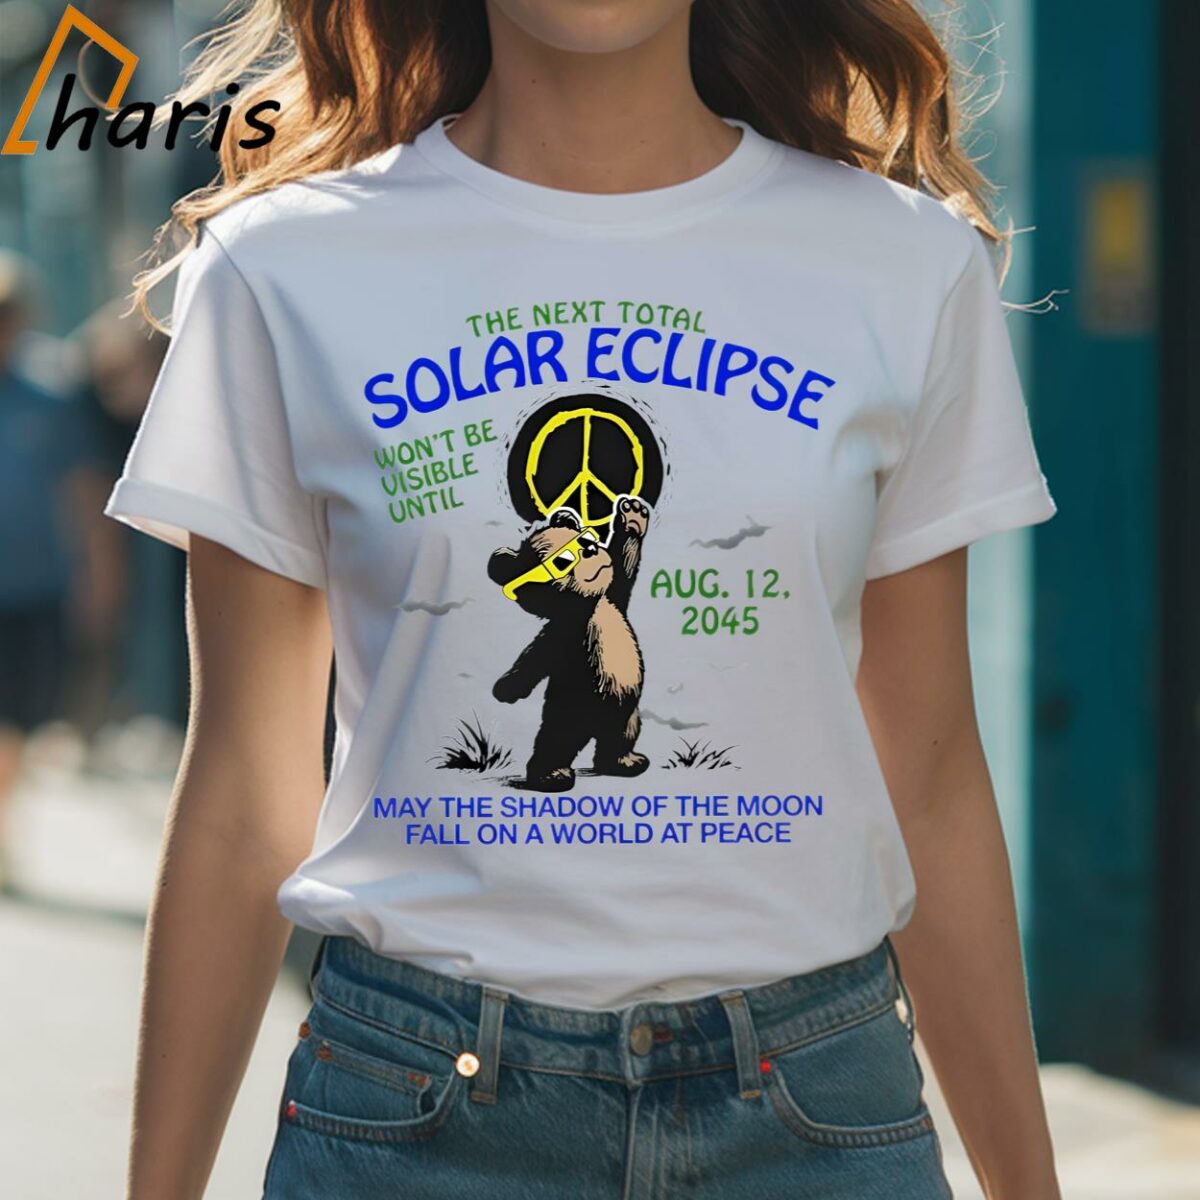 The Next Total Solar Eclipse Wont Be Visible Until Aug 12 2045 Shirt 1 Shirt